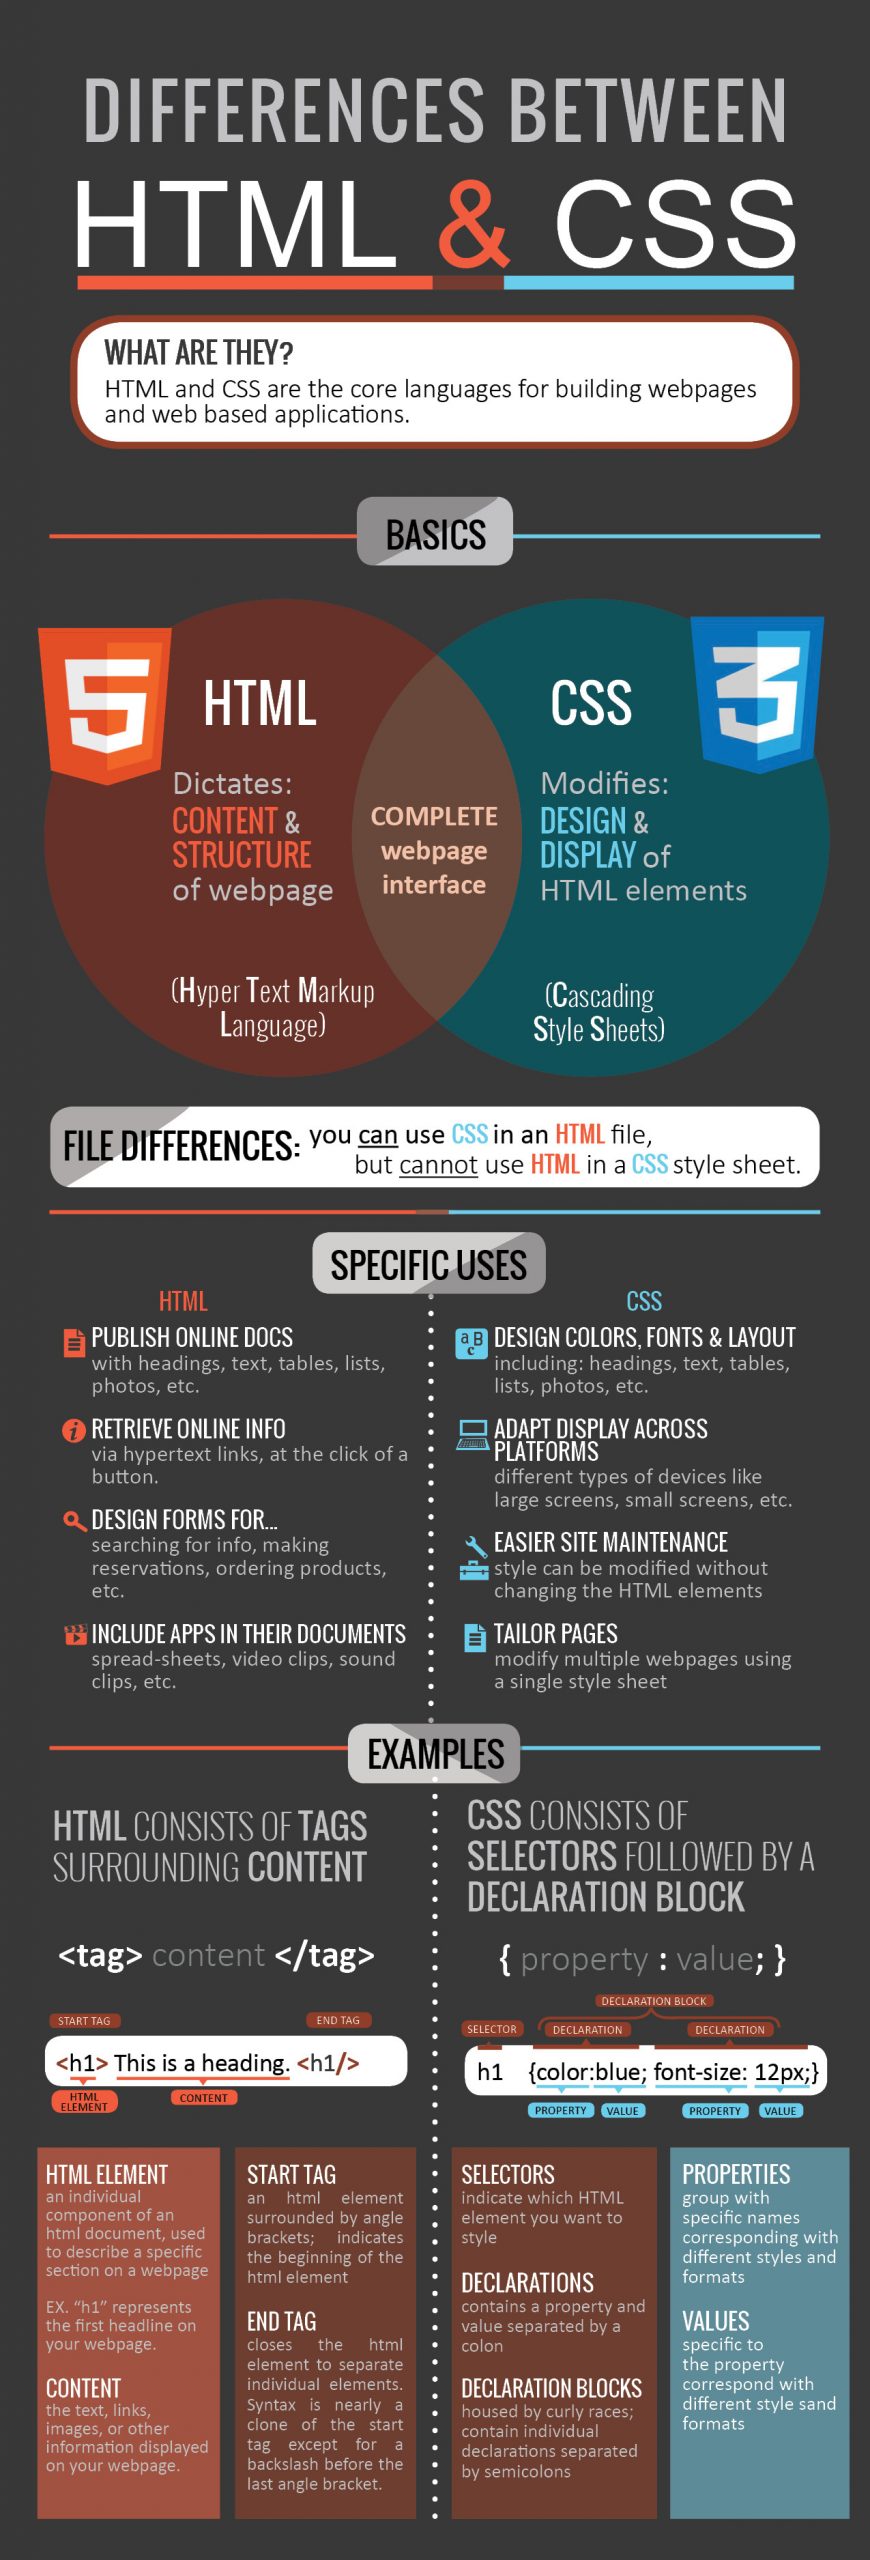 HTML vs CSS infographic